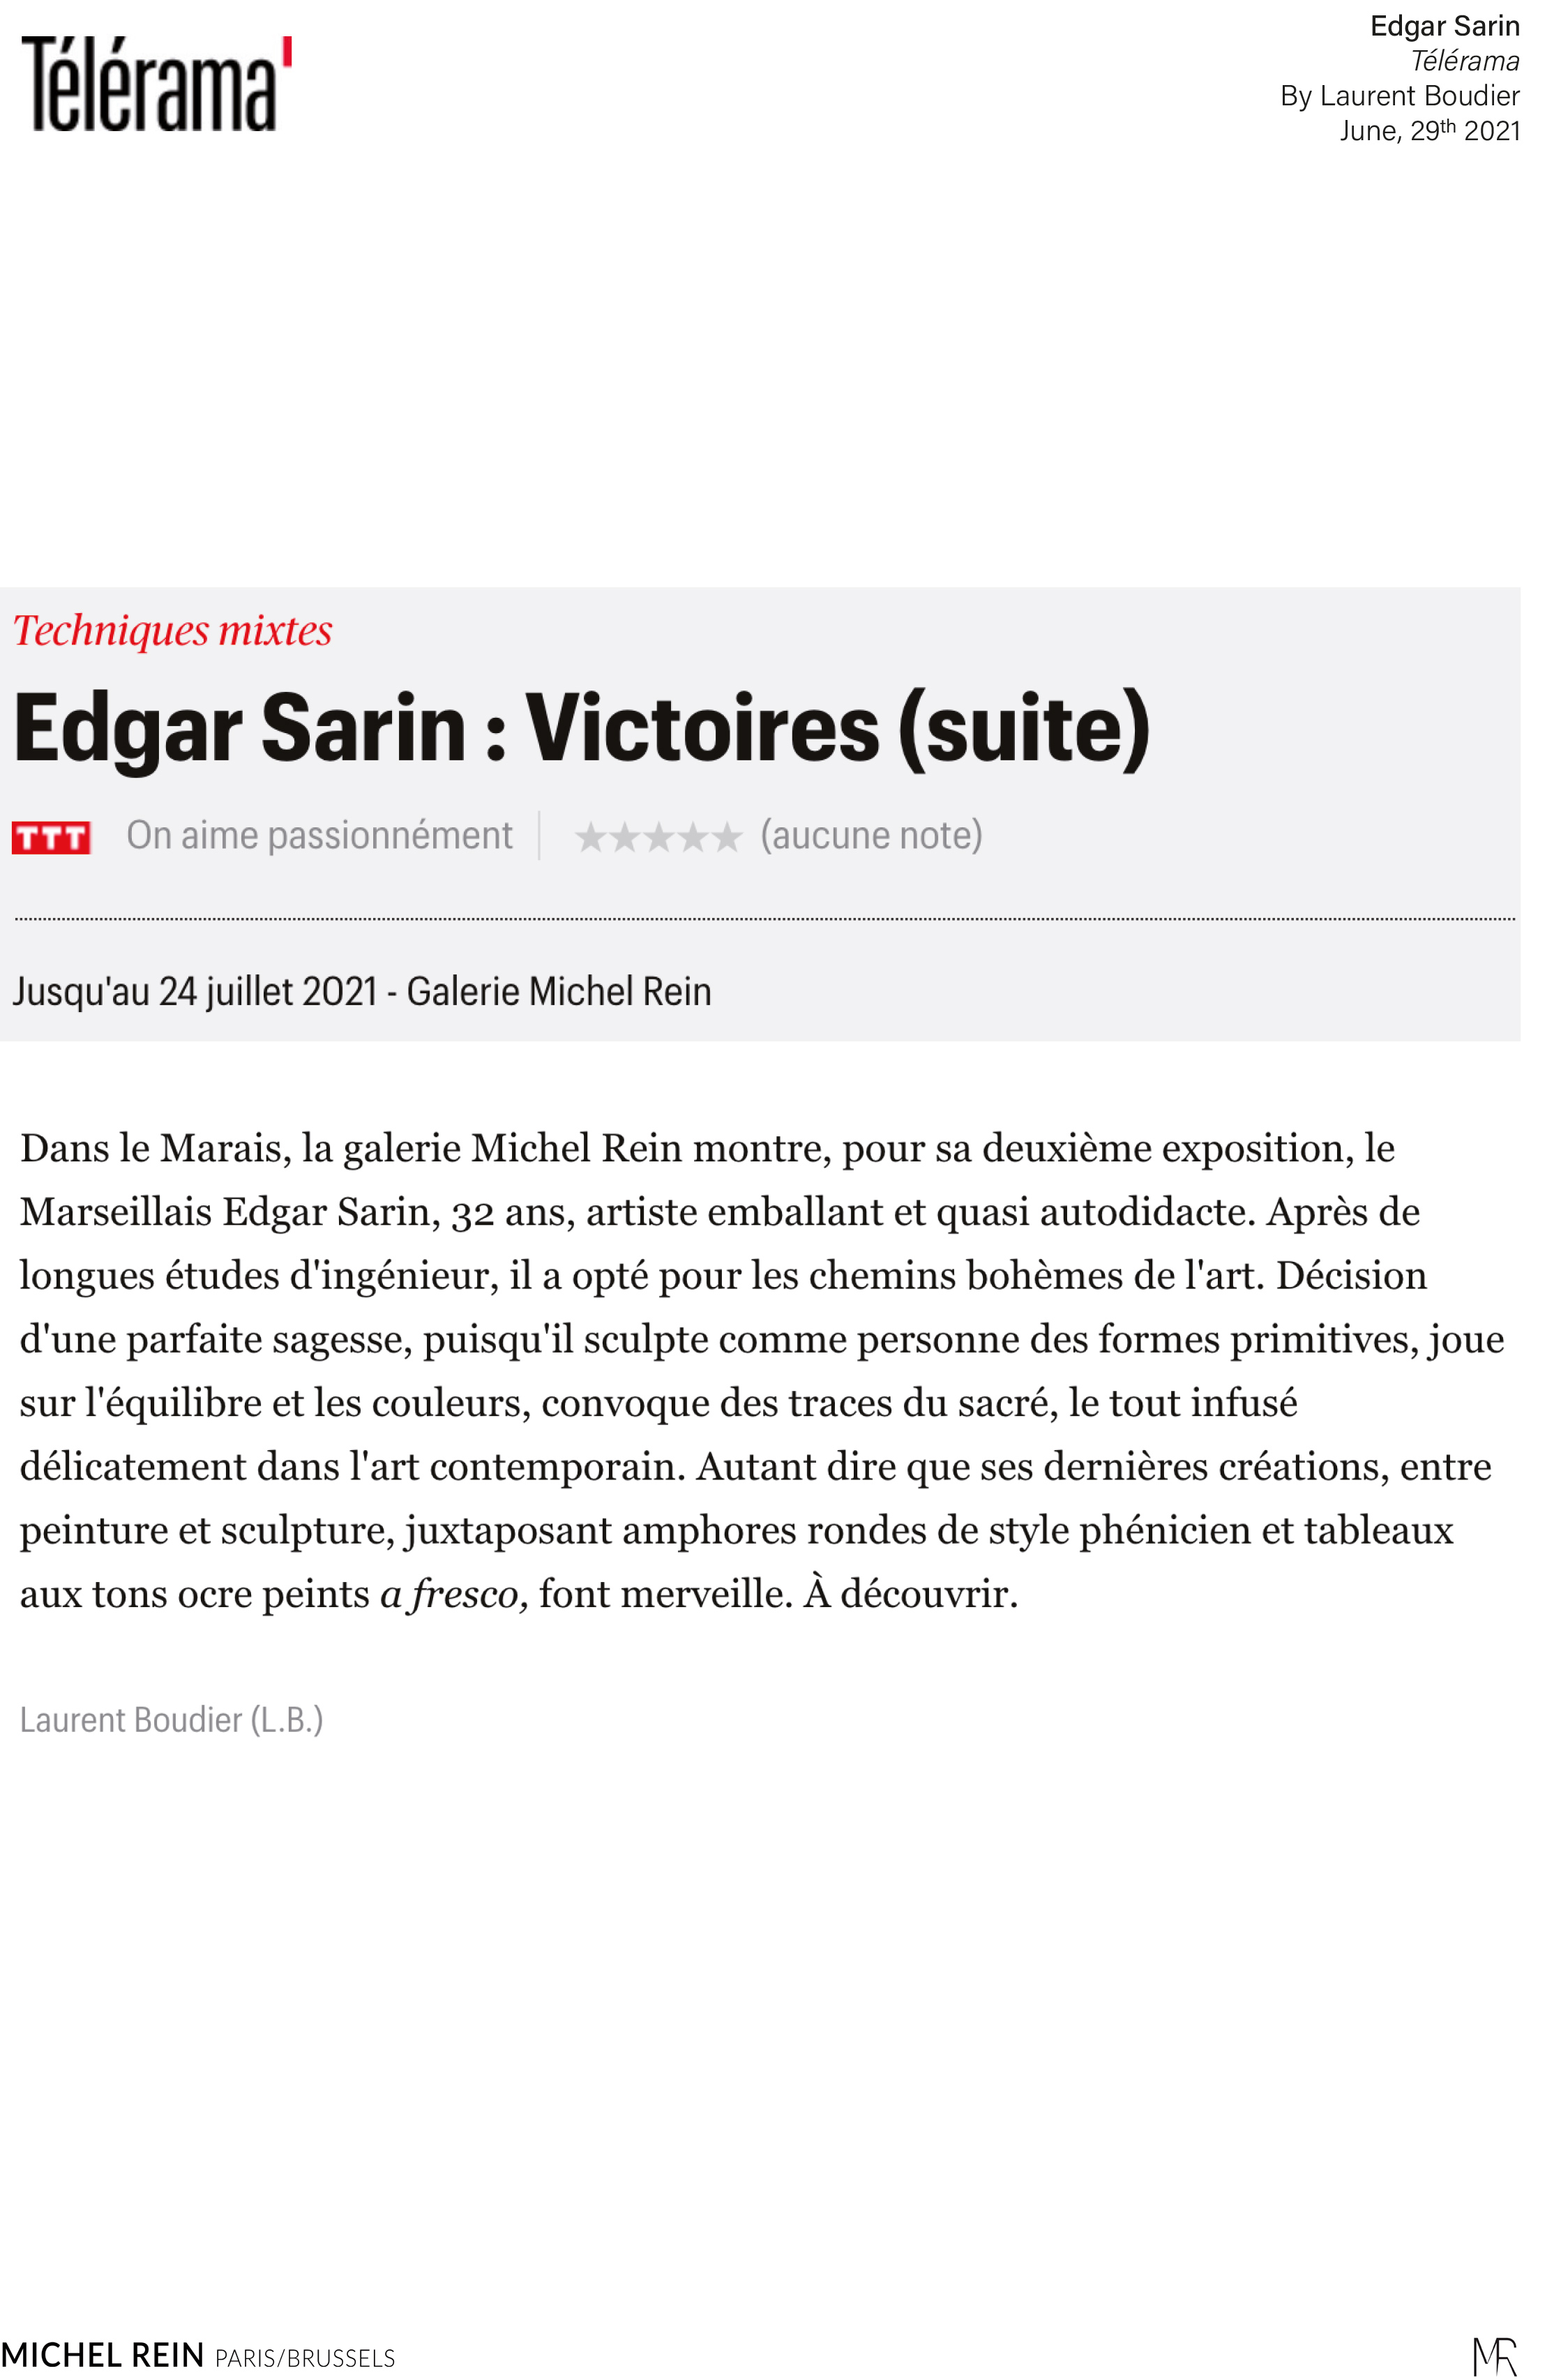 Edgar Sarin : Victoires (suite) - Tlrama